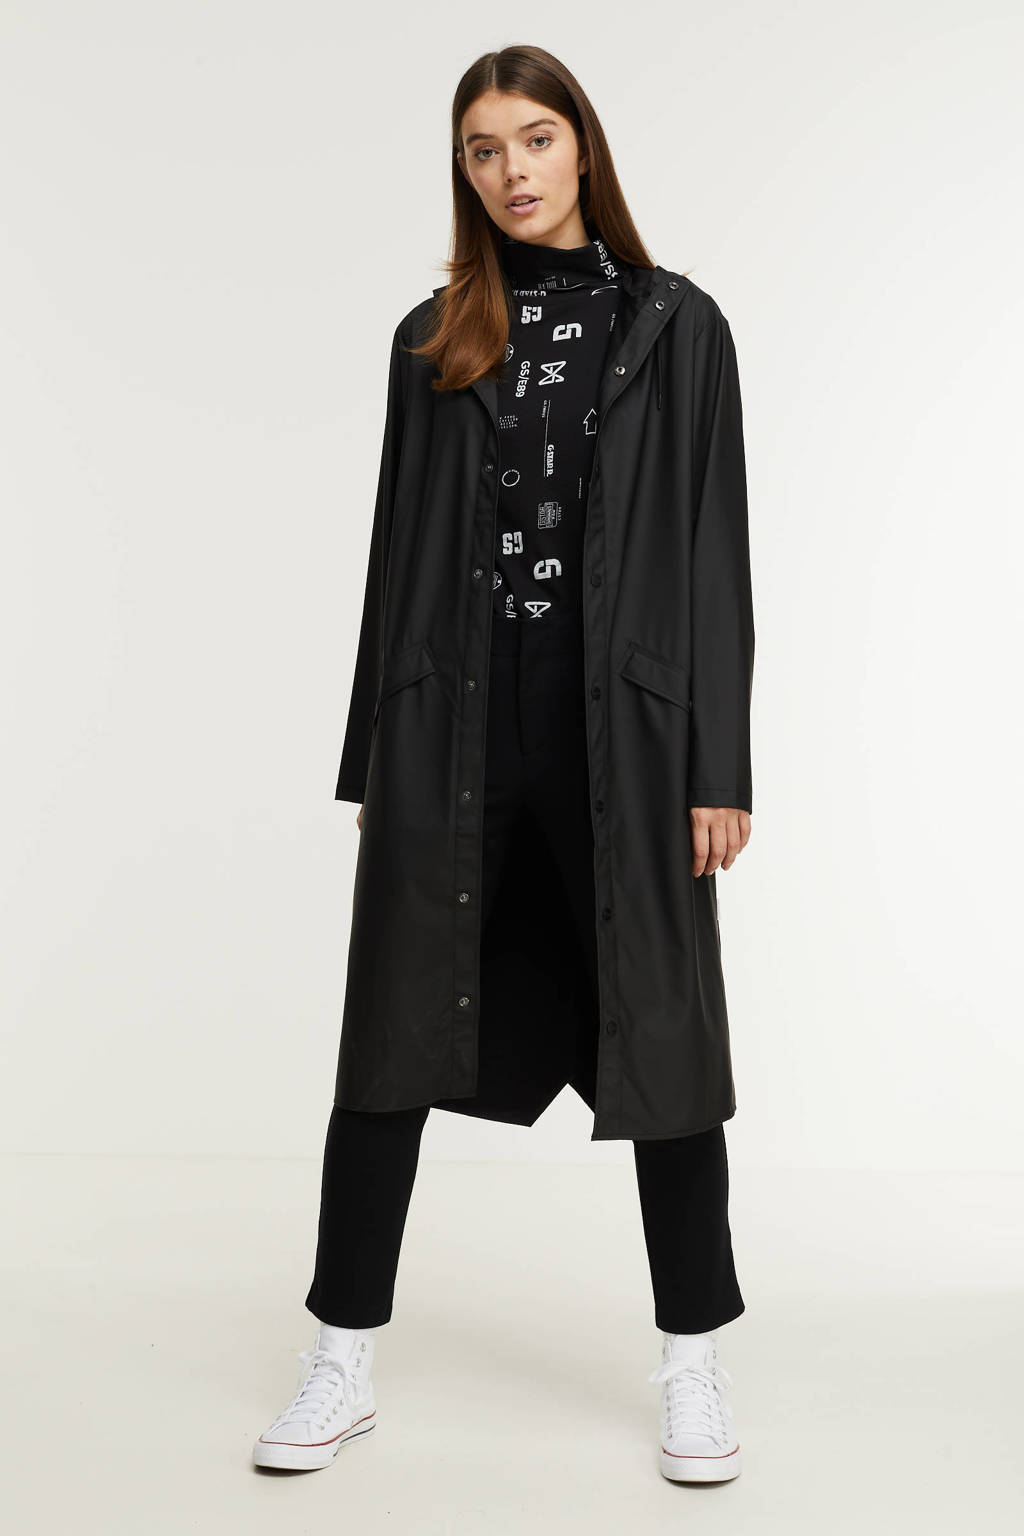 Zwarte dames Rains coated jas van polyester met lange mouwen, capuchon en rits- en drukknoopsluiting